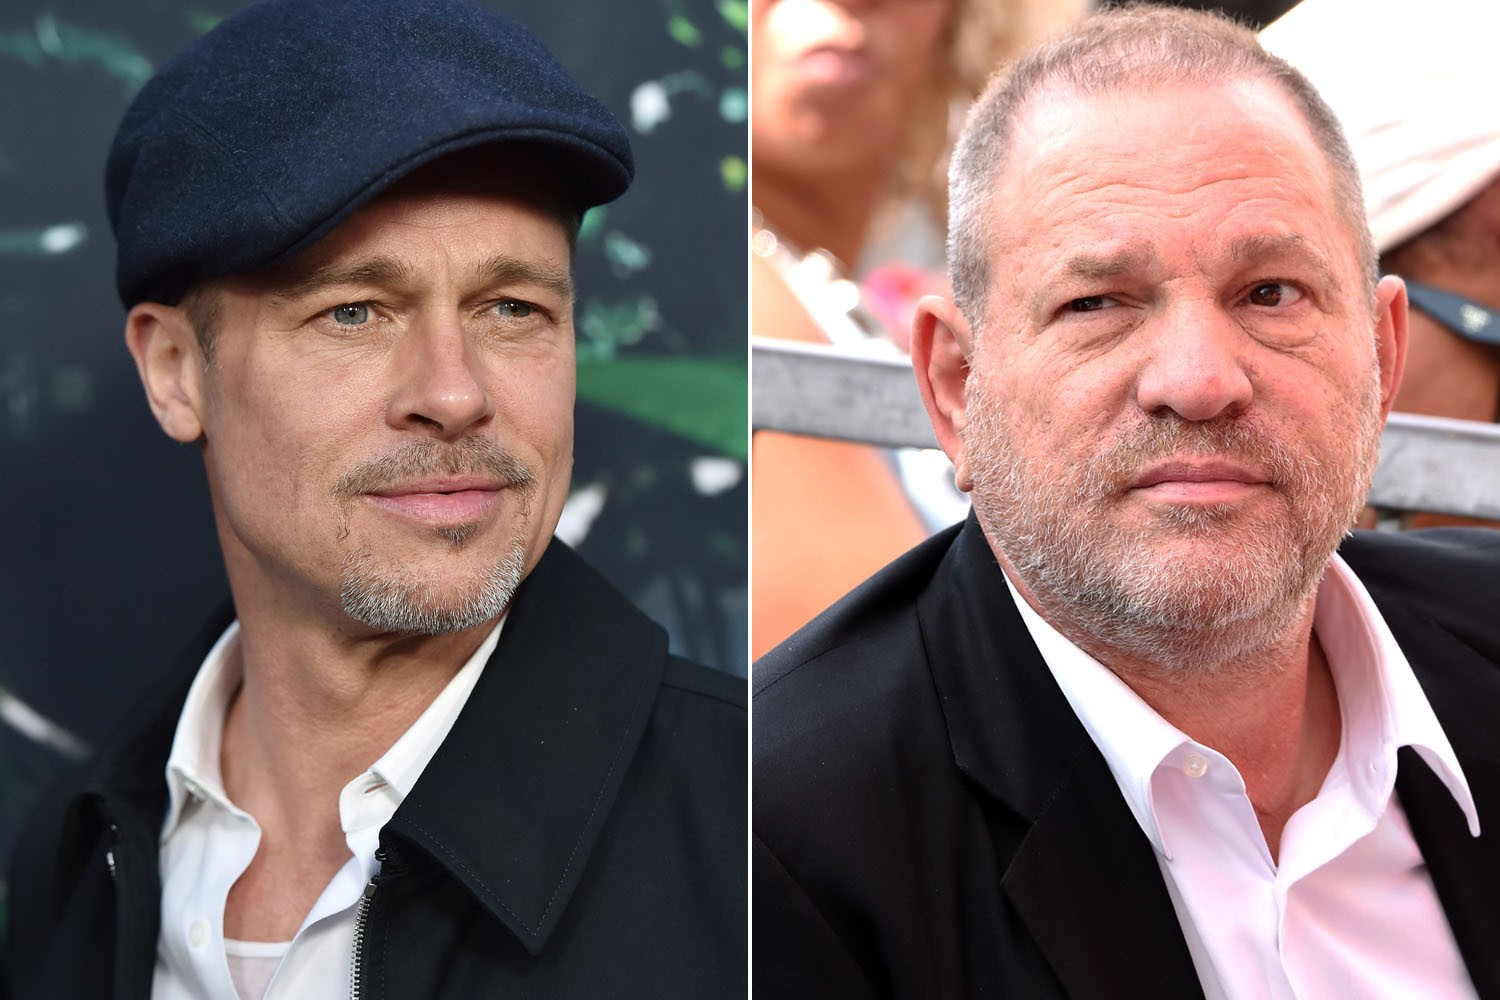 Brad Pitt threatened to kill Harvery Weinstein after he harassed Gwyneth Paltrow